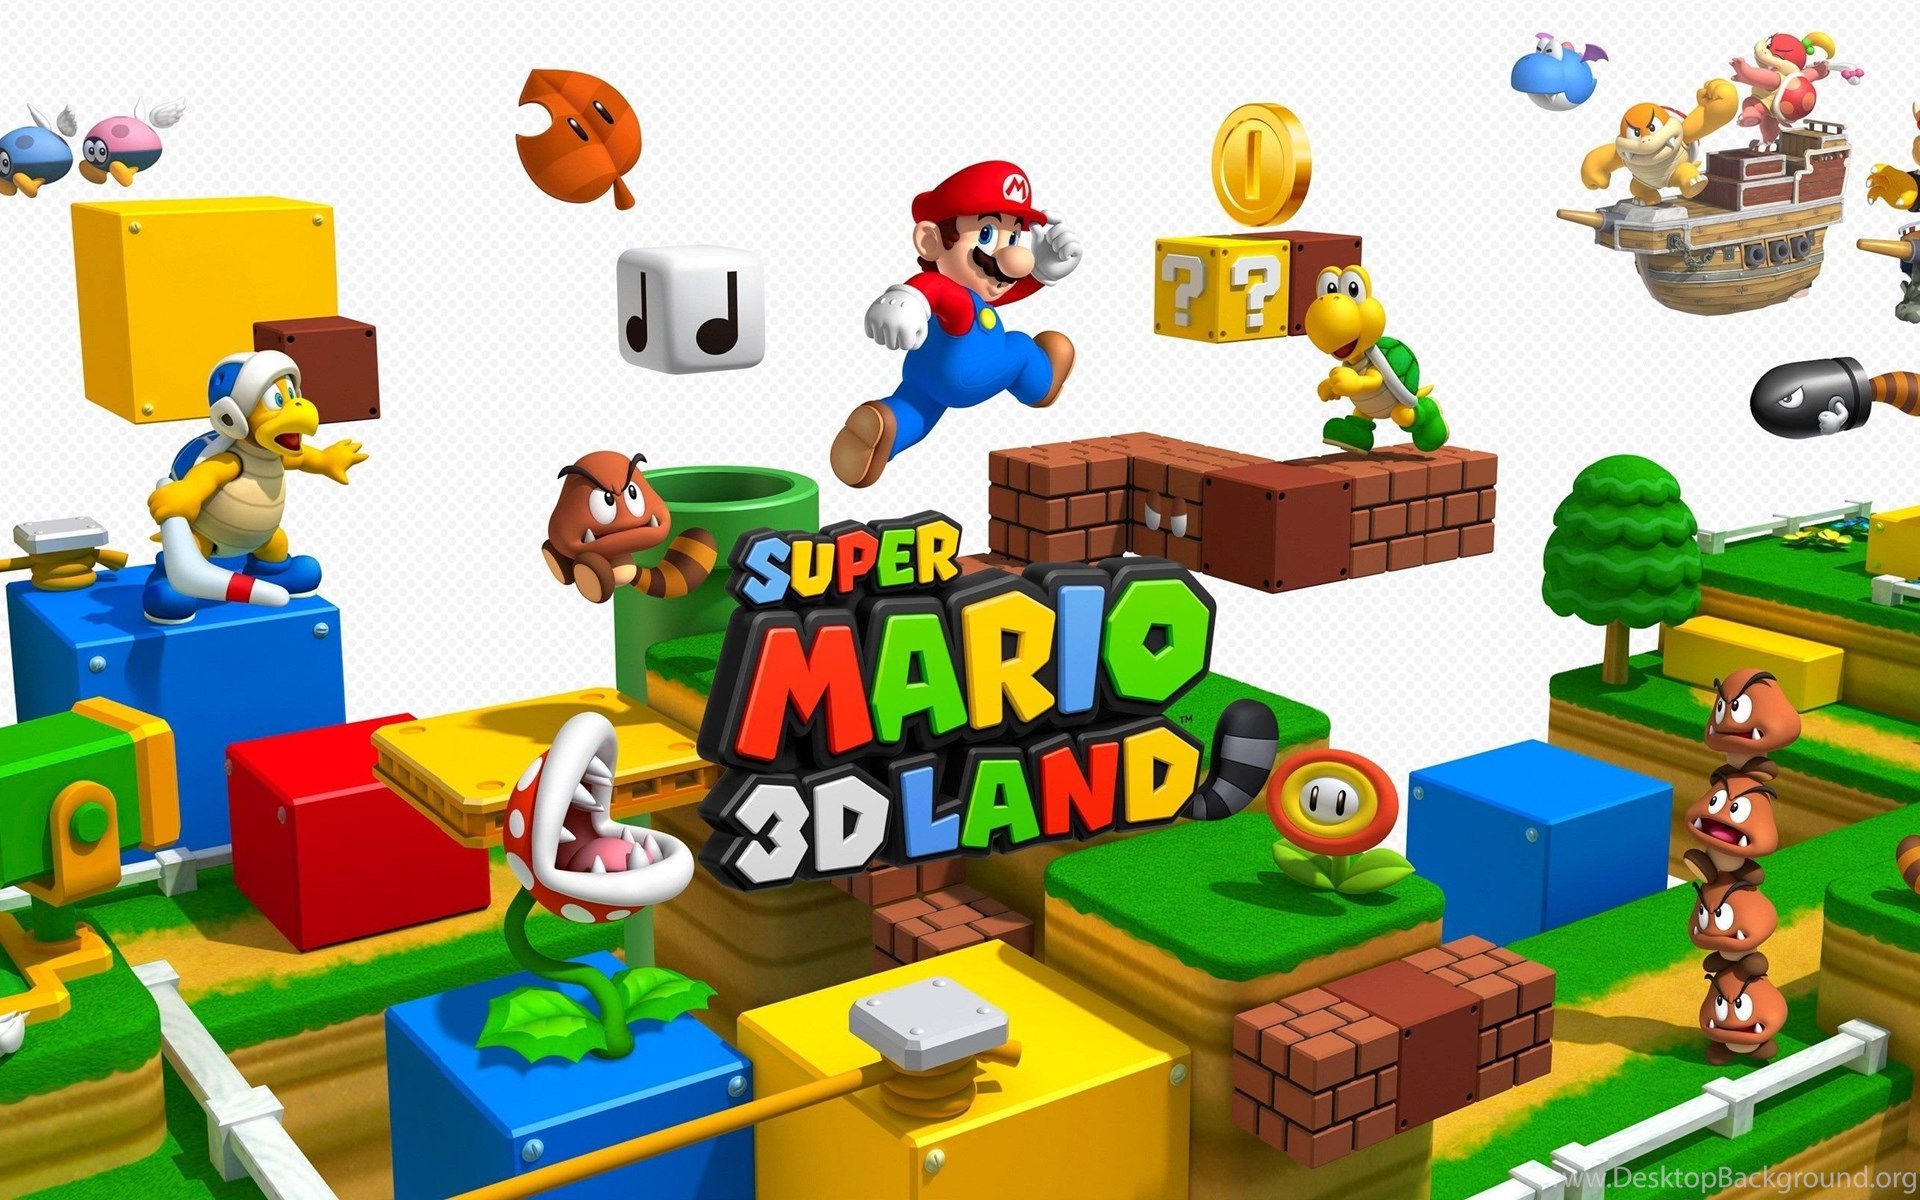 Super mario d. Super Mario 3ds. Super Mario 3d Land [3ds]. Mario Land 3. Марио 3д ворлд.